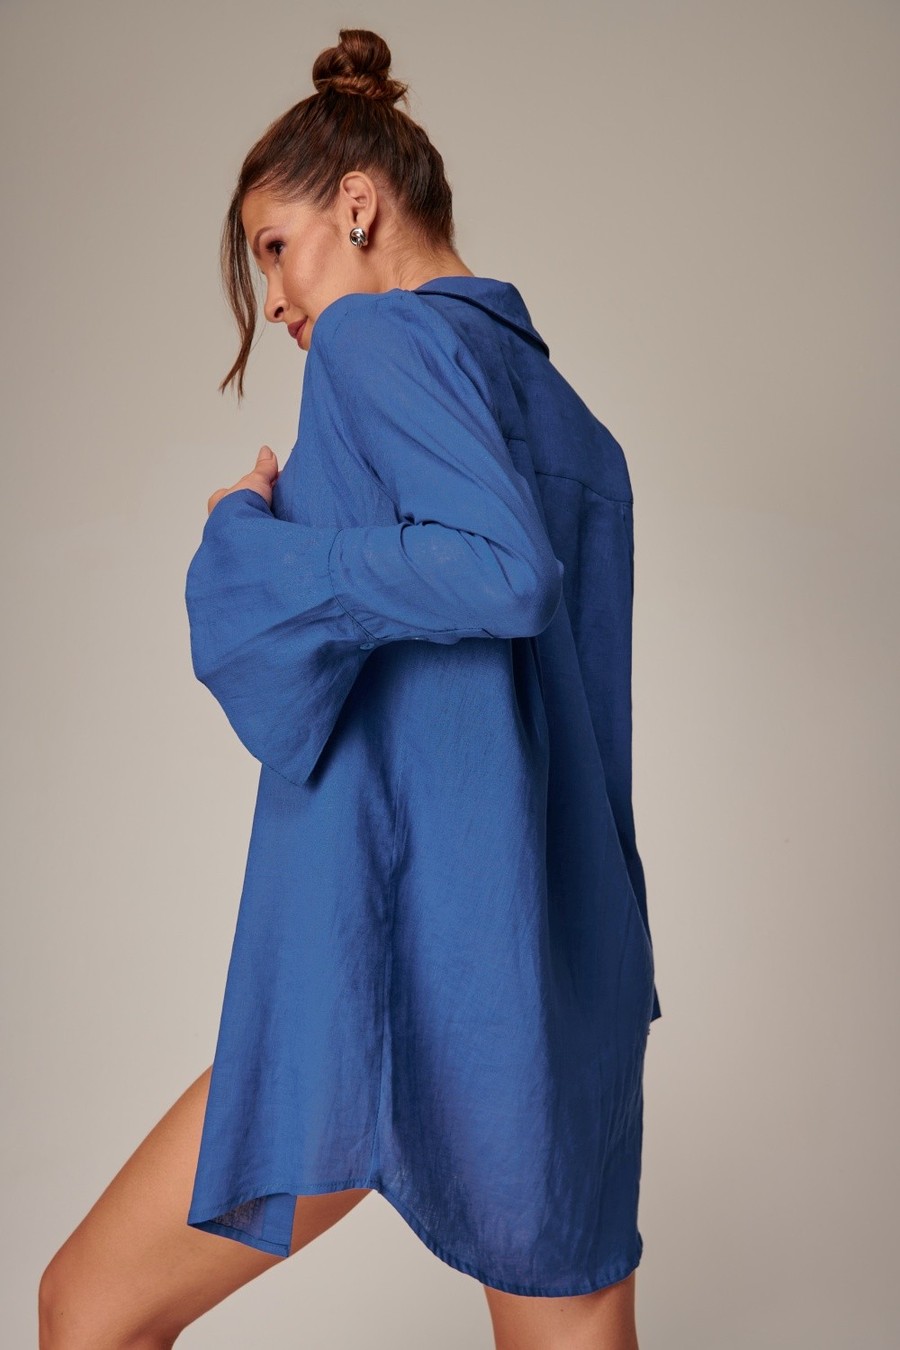 chemise azul marinho 2503 lefah